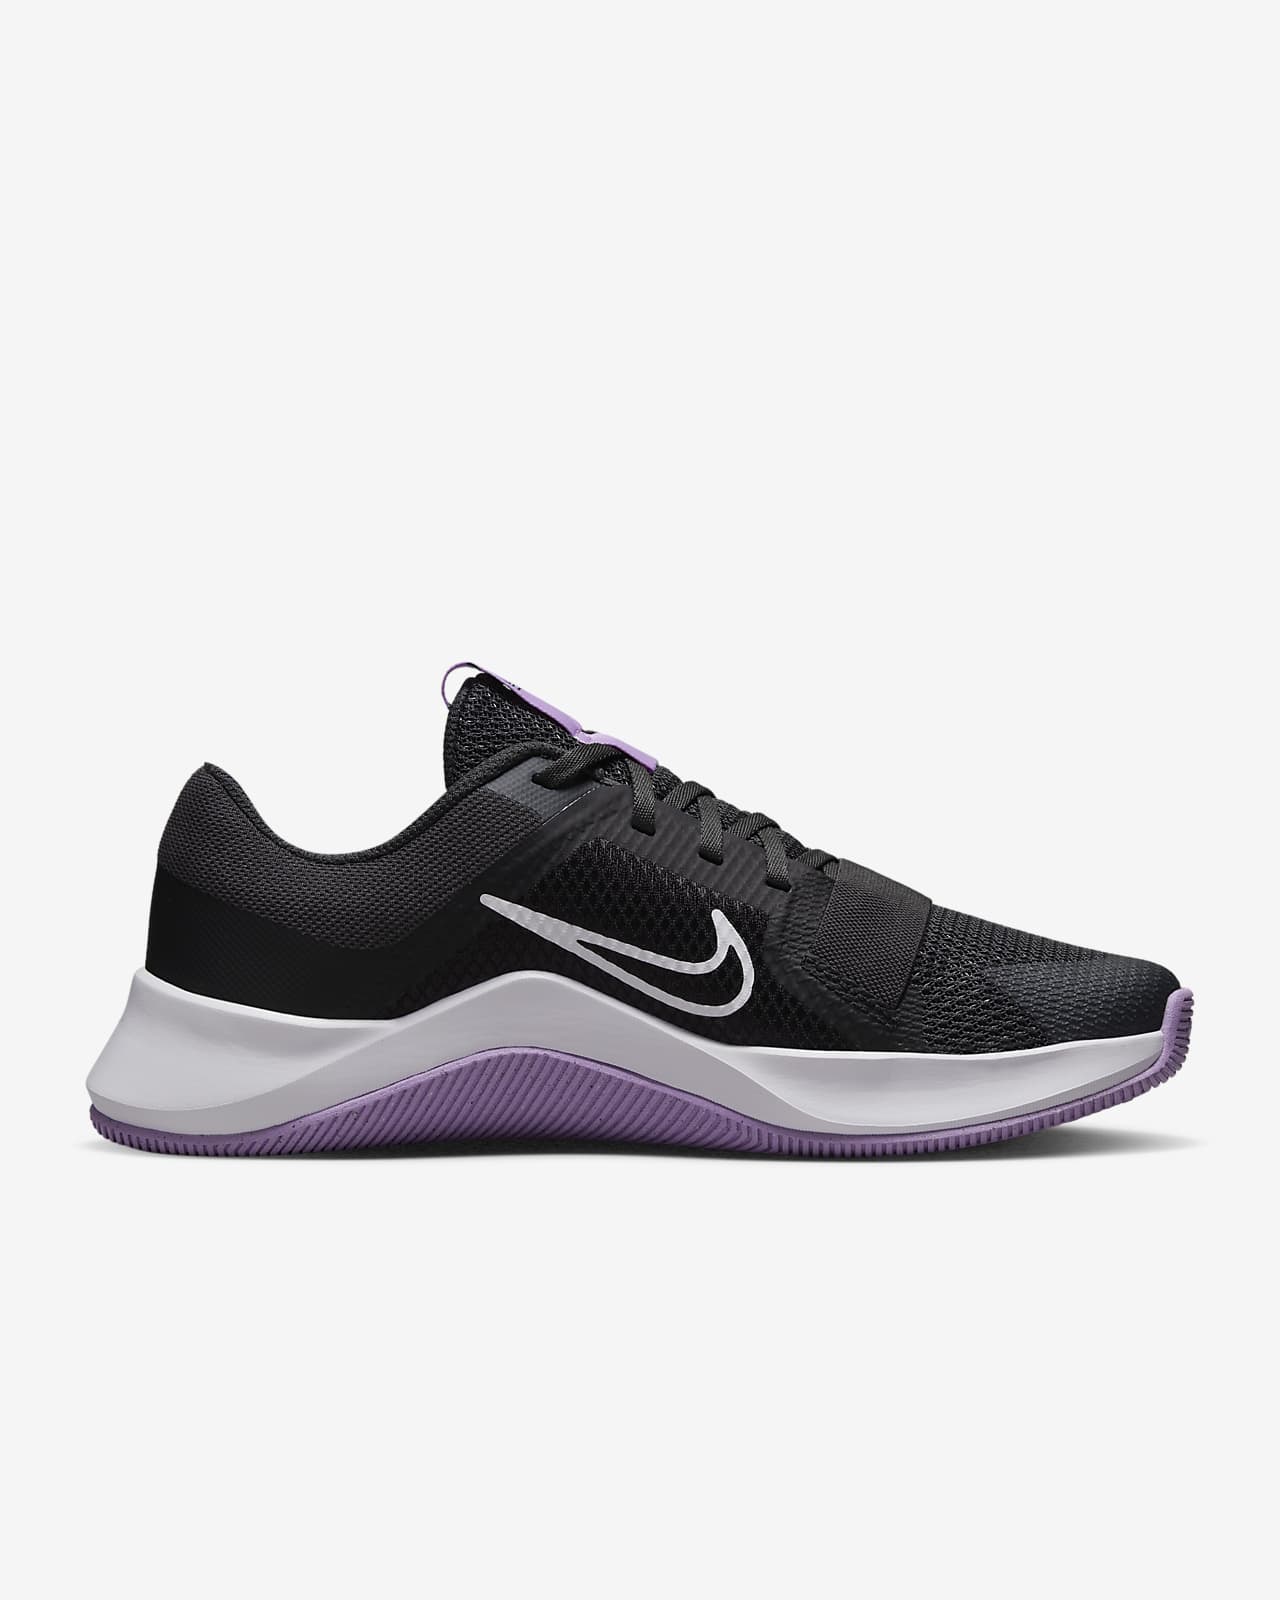 Nike MC Trainer nike women's fitness shoes 2 Women's Training Shoes. Nike.com